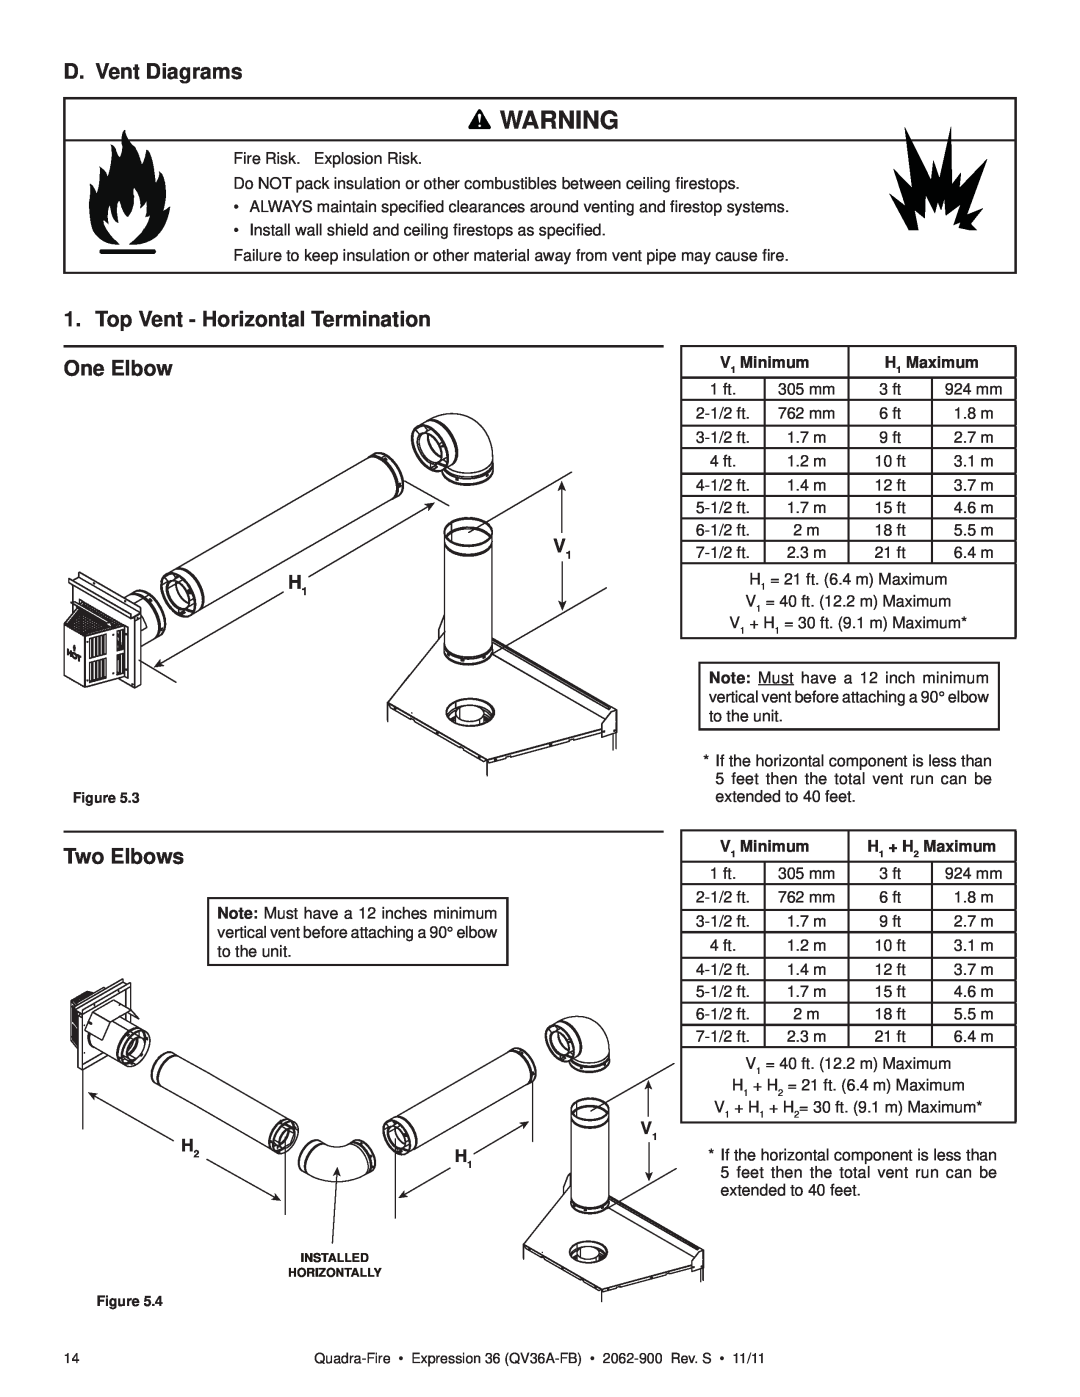 Quadra-Fire QV36A-FB D. Vent Diagrams, Top Vent - Horizontal Termination One Elbow, Two Elbows, V1 H1, V1 Minimum 